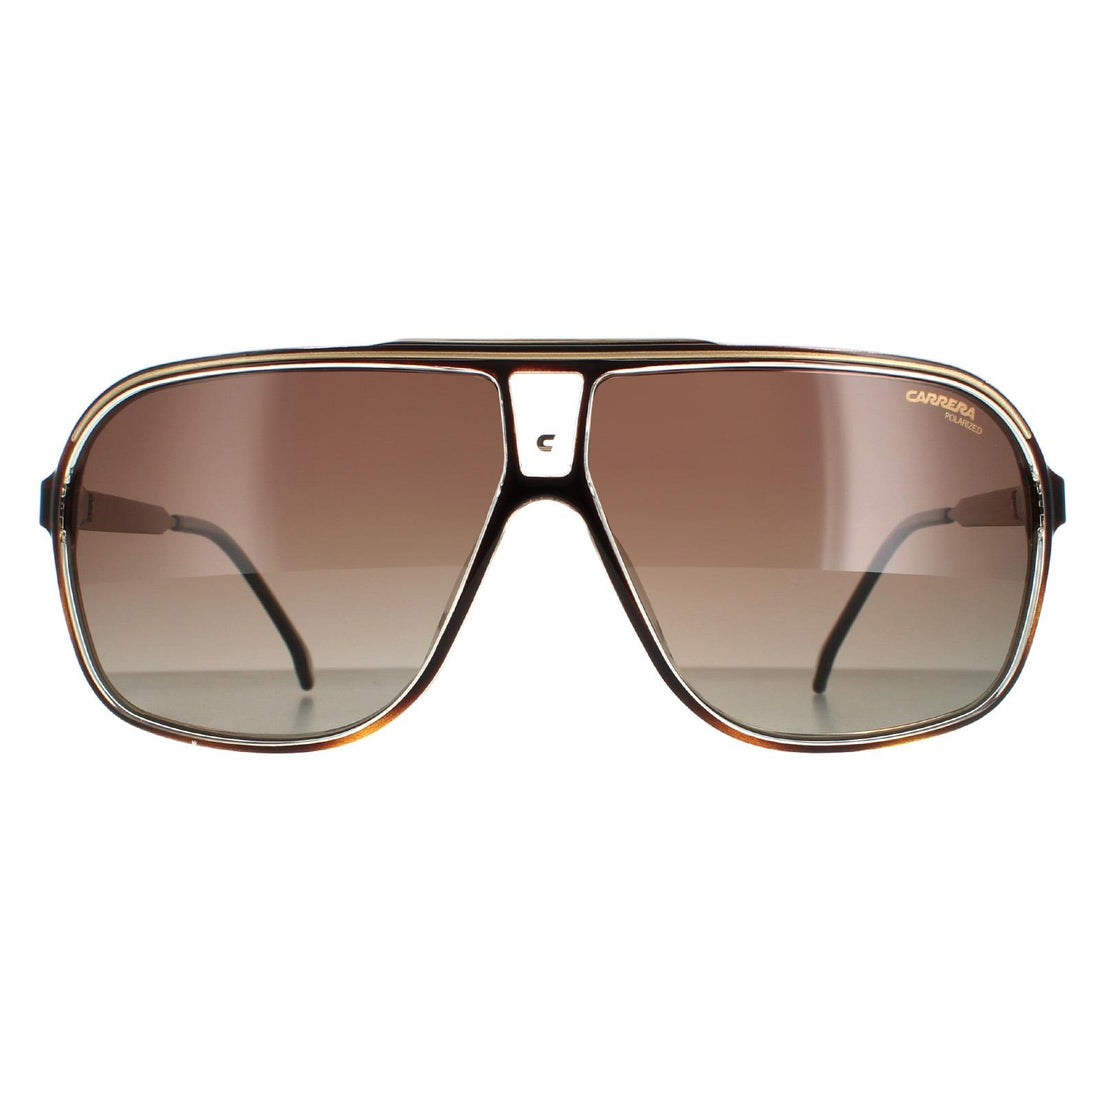 Carrera Grand Prix 3 Sunglasses Havana / Brown Gradient Polarized